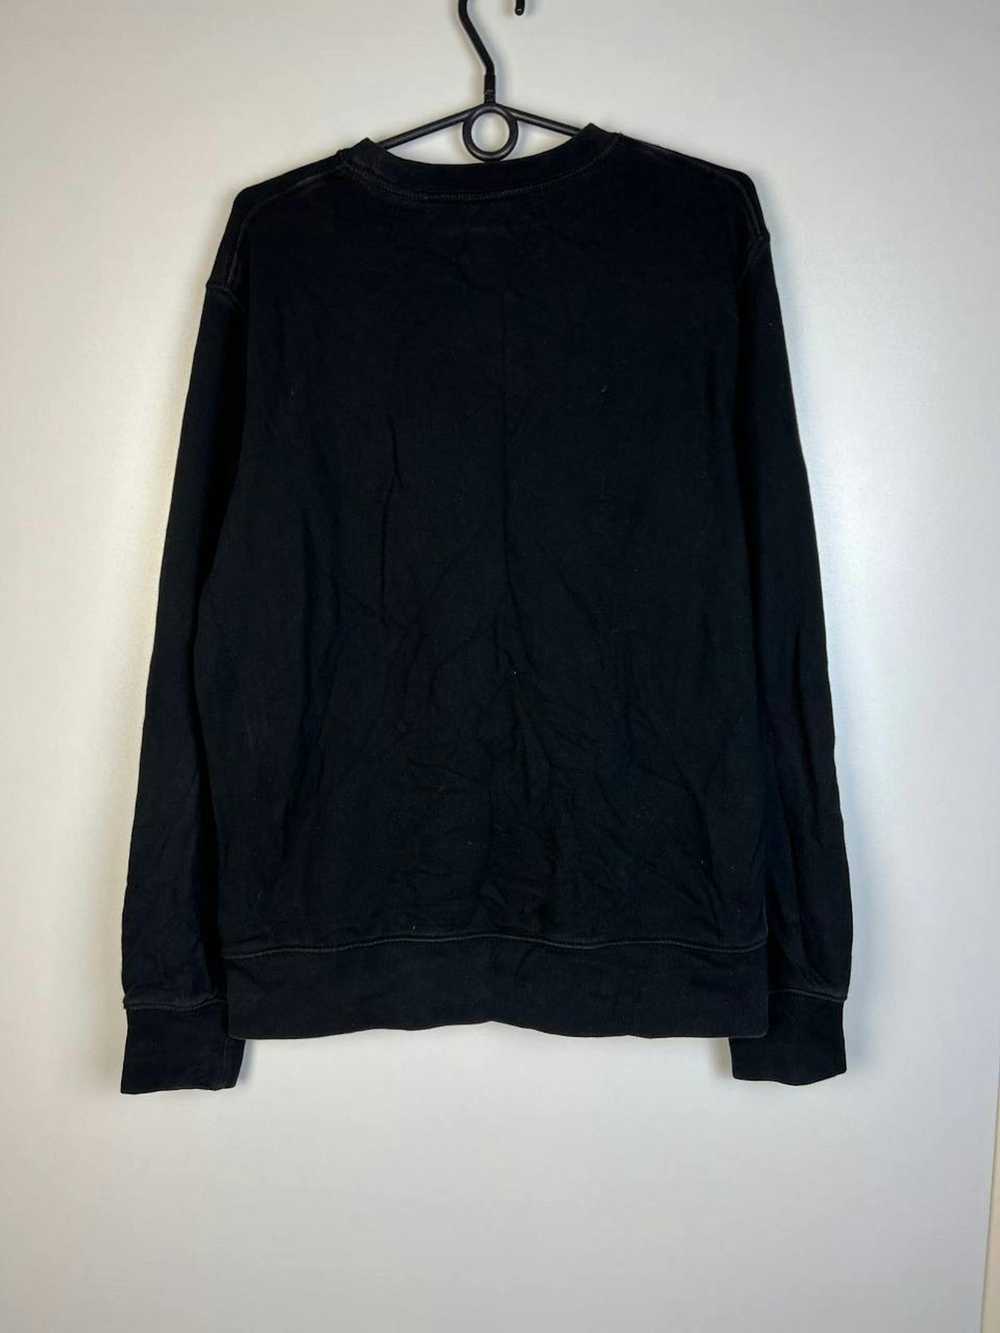 Arket × Vintage Arket luxury sweatshirt size M - image 7